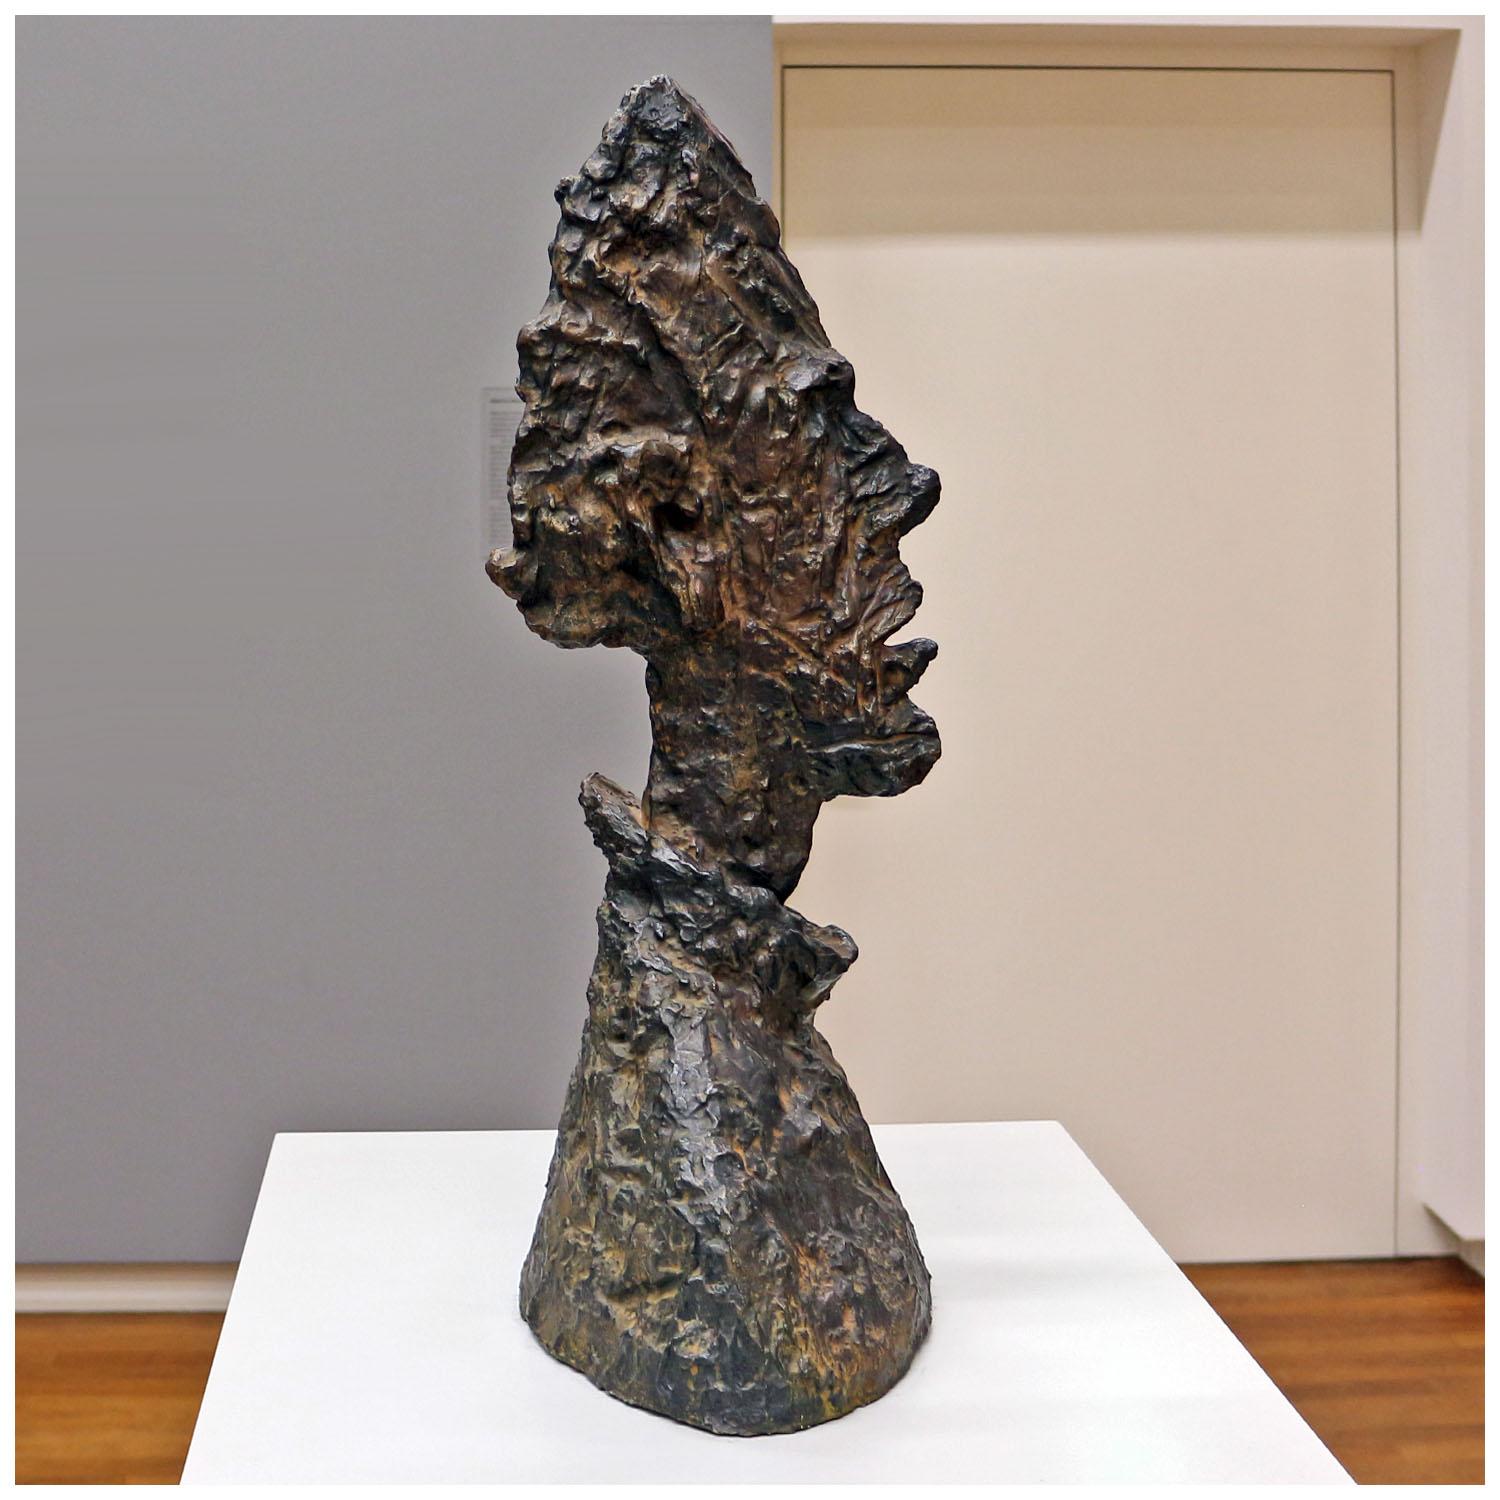 Alberto Giacometti. Large Head of Diego. 1954. Kunsthaus Zurich